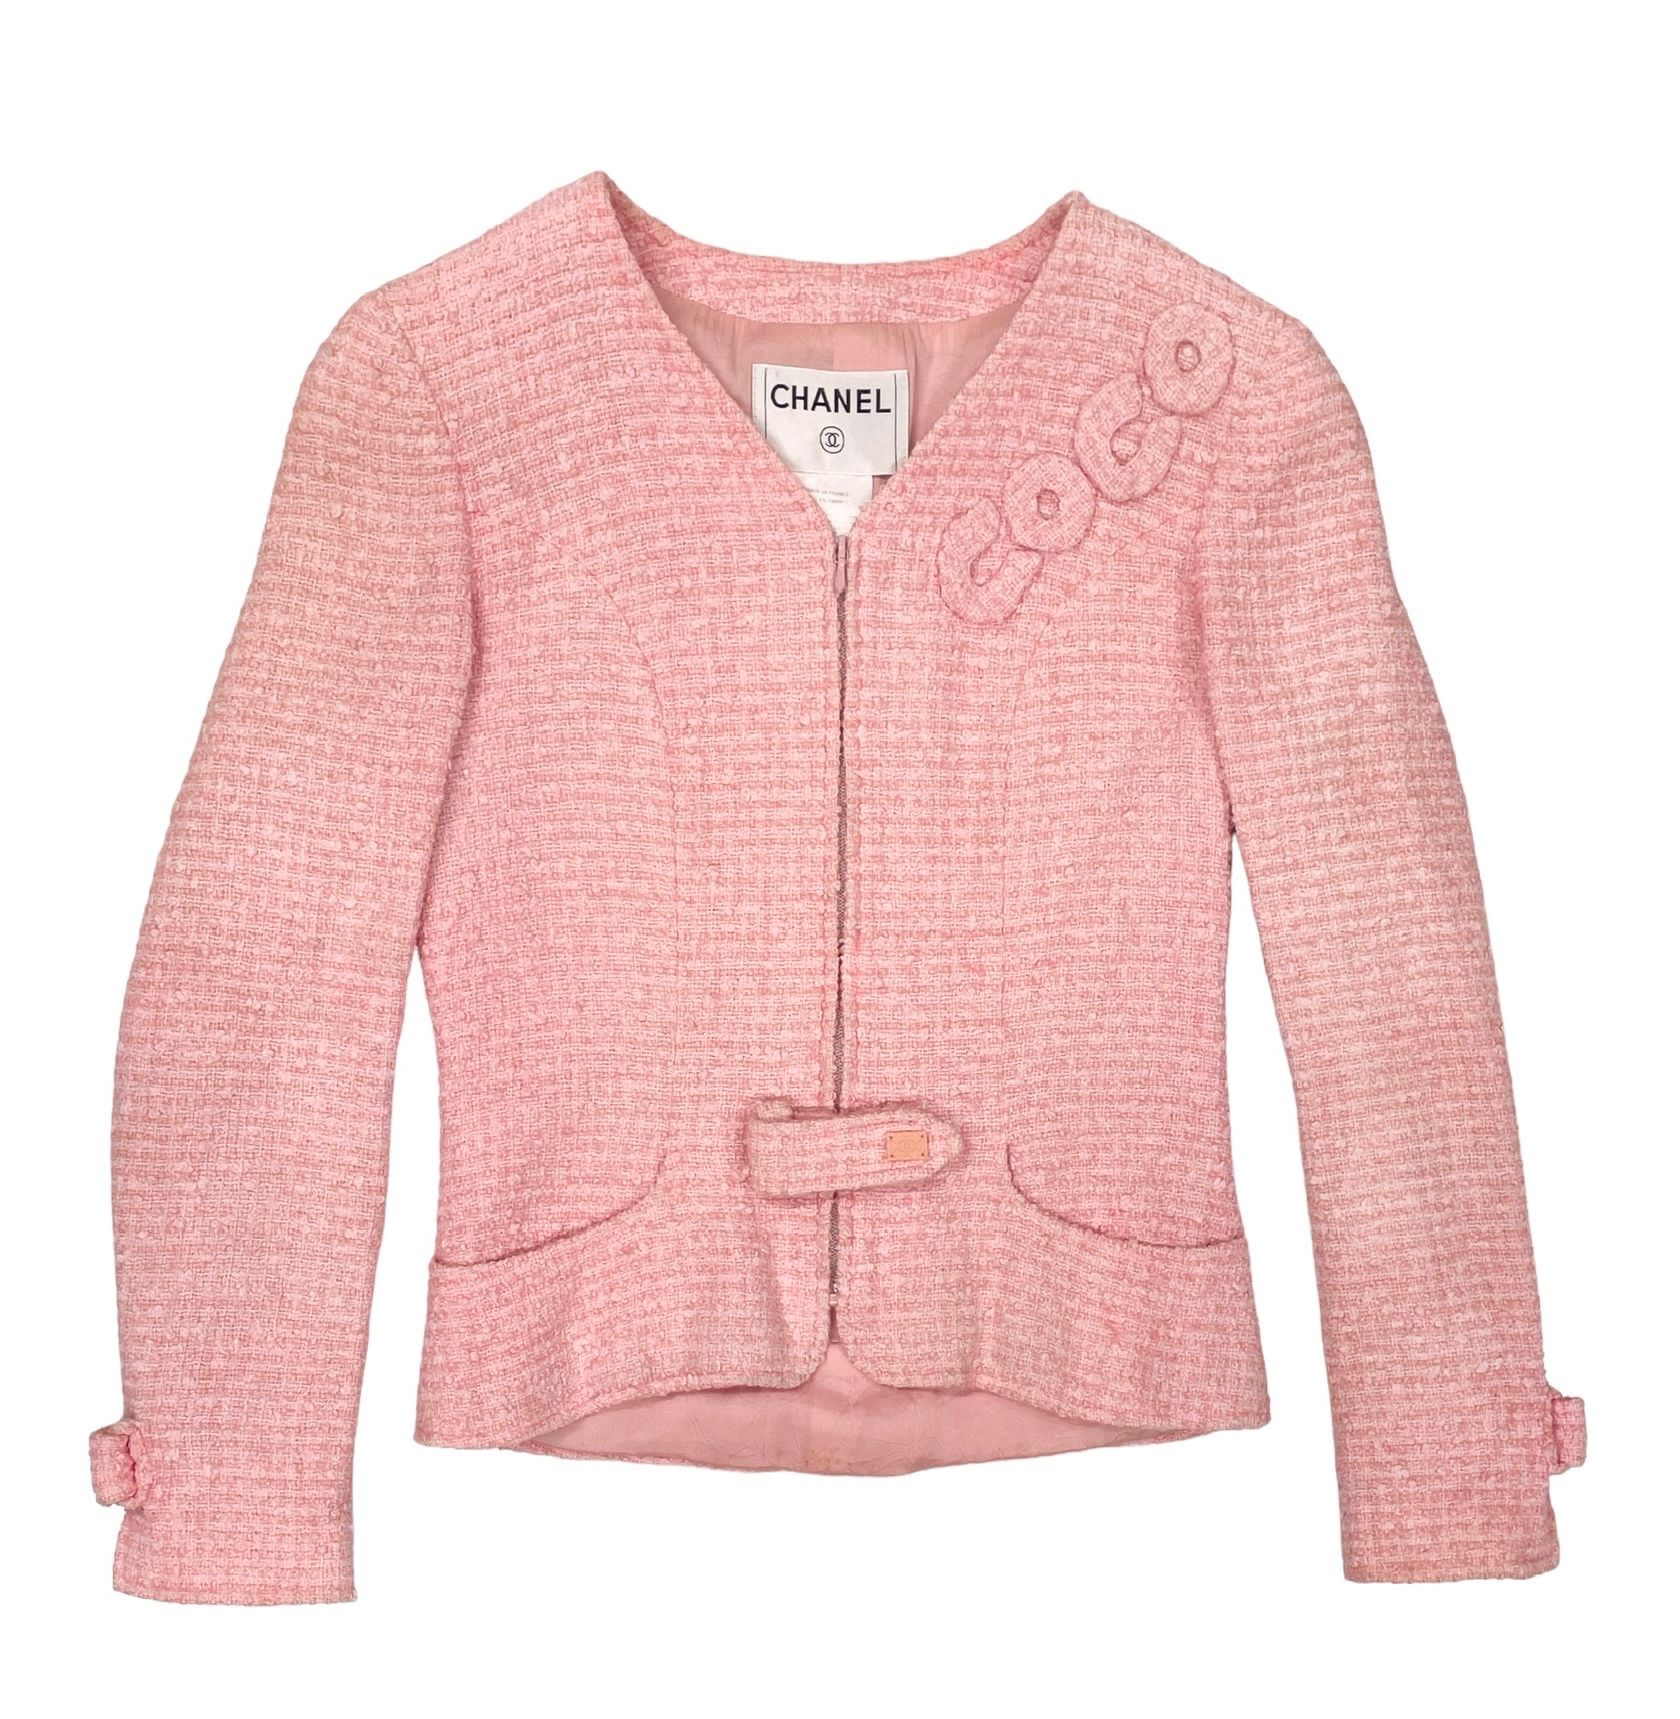 Chanel coco tweed jacket - Gem